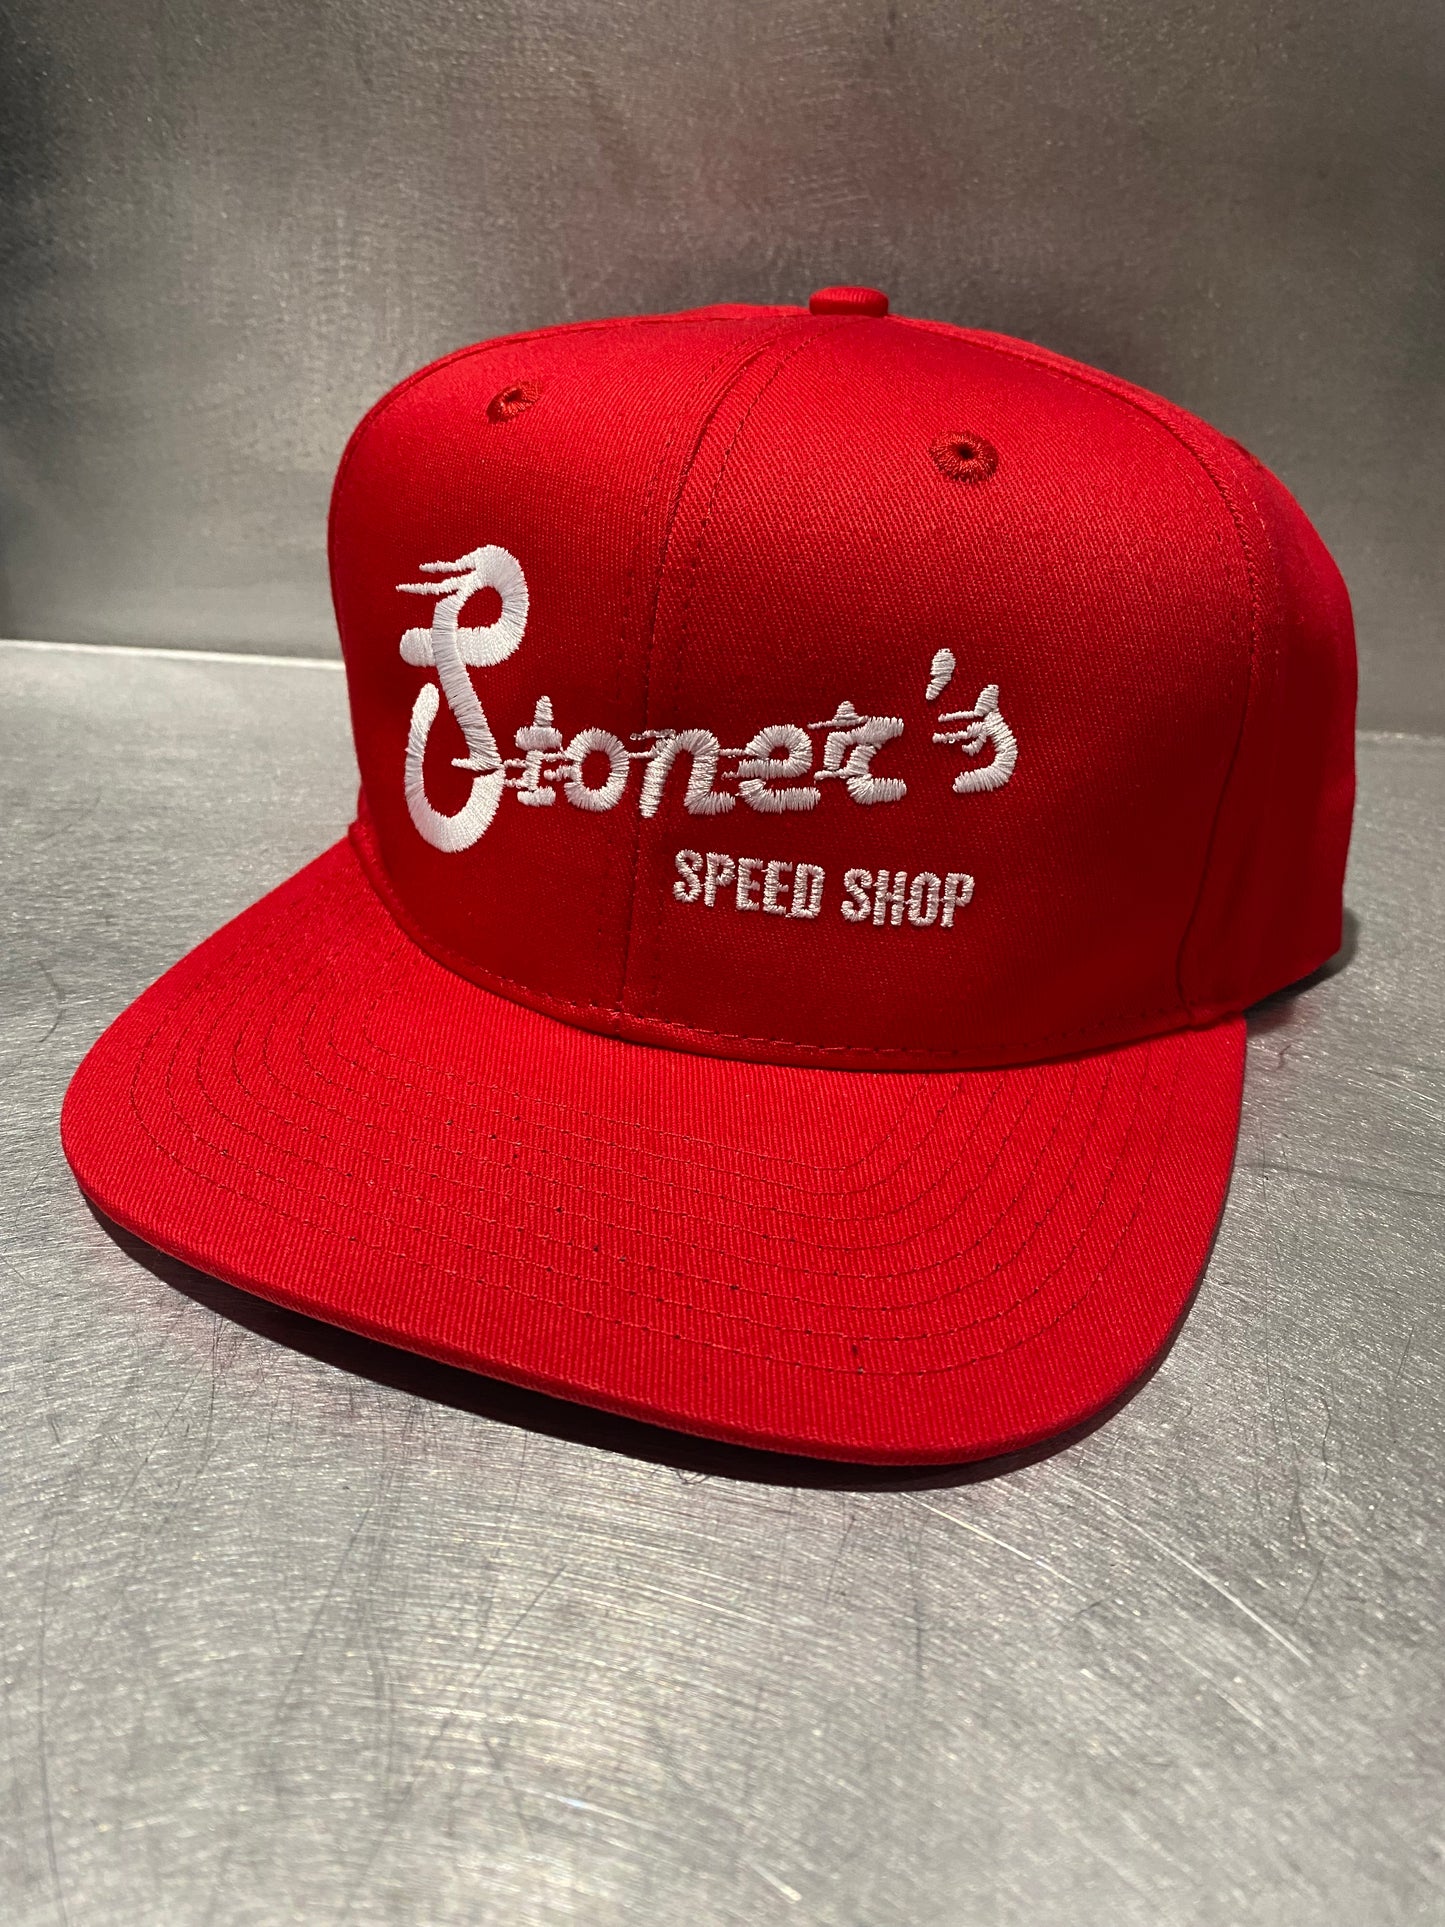 Stoner's Speed Shop standard Red/White Hat